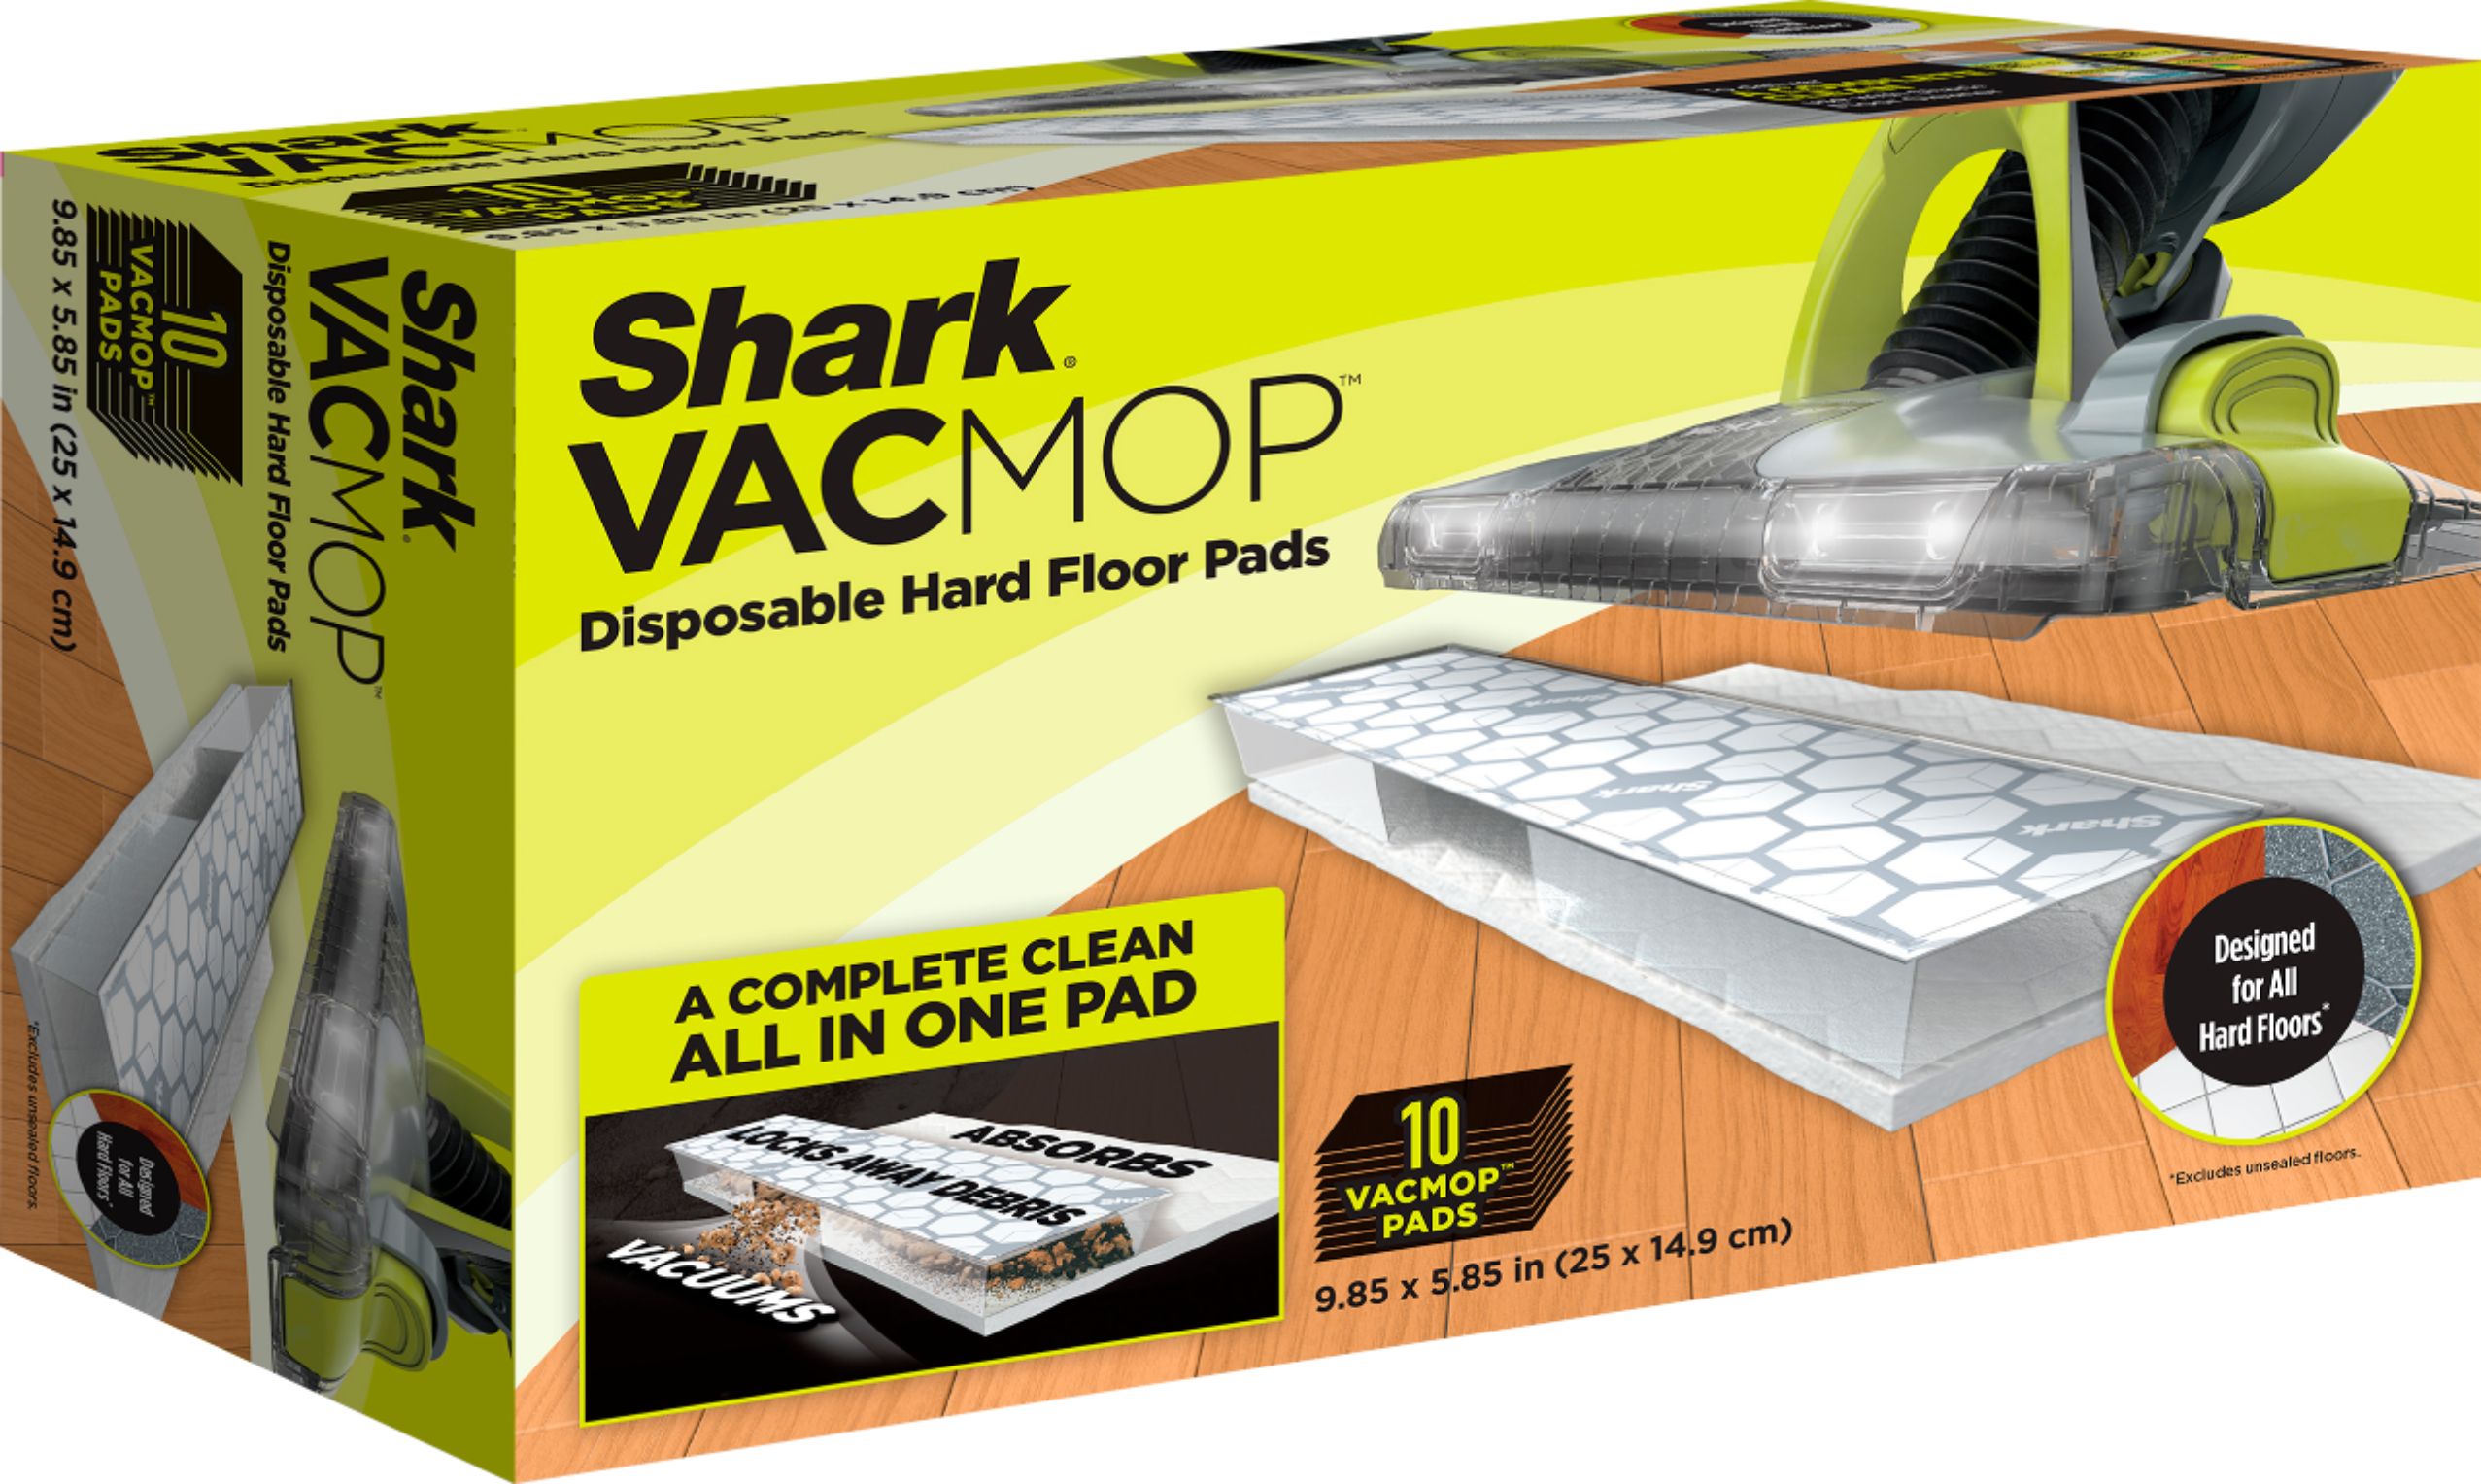 Shark Vacmop Disposable Hard Floor, Hardwood Floor Vacuum And Mop